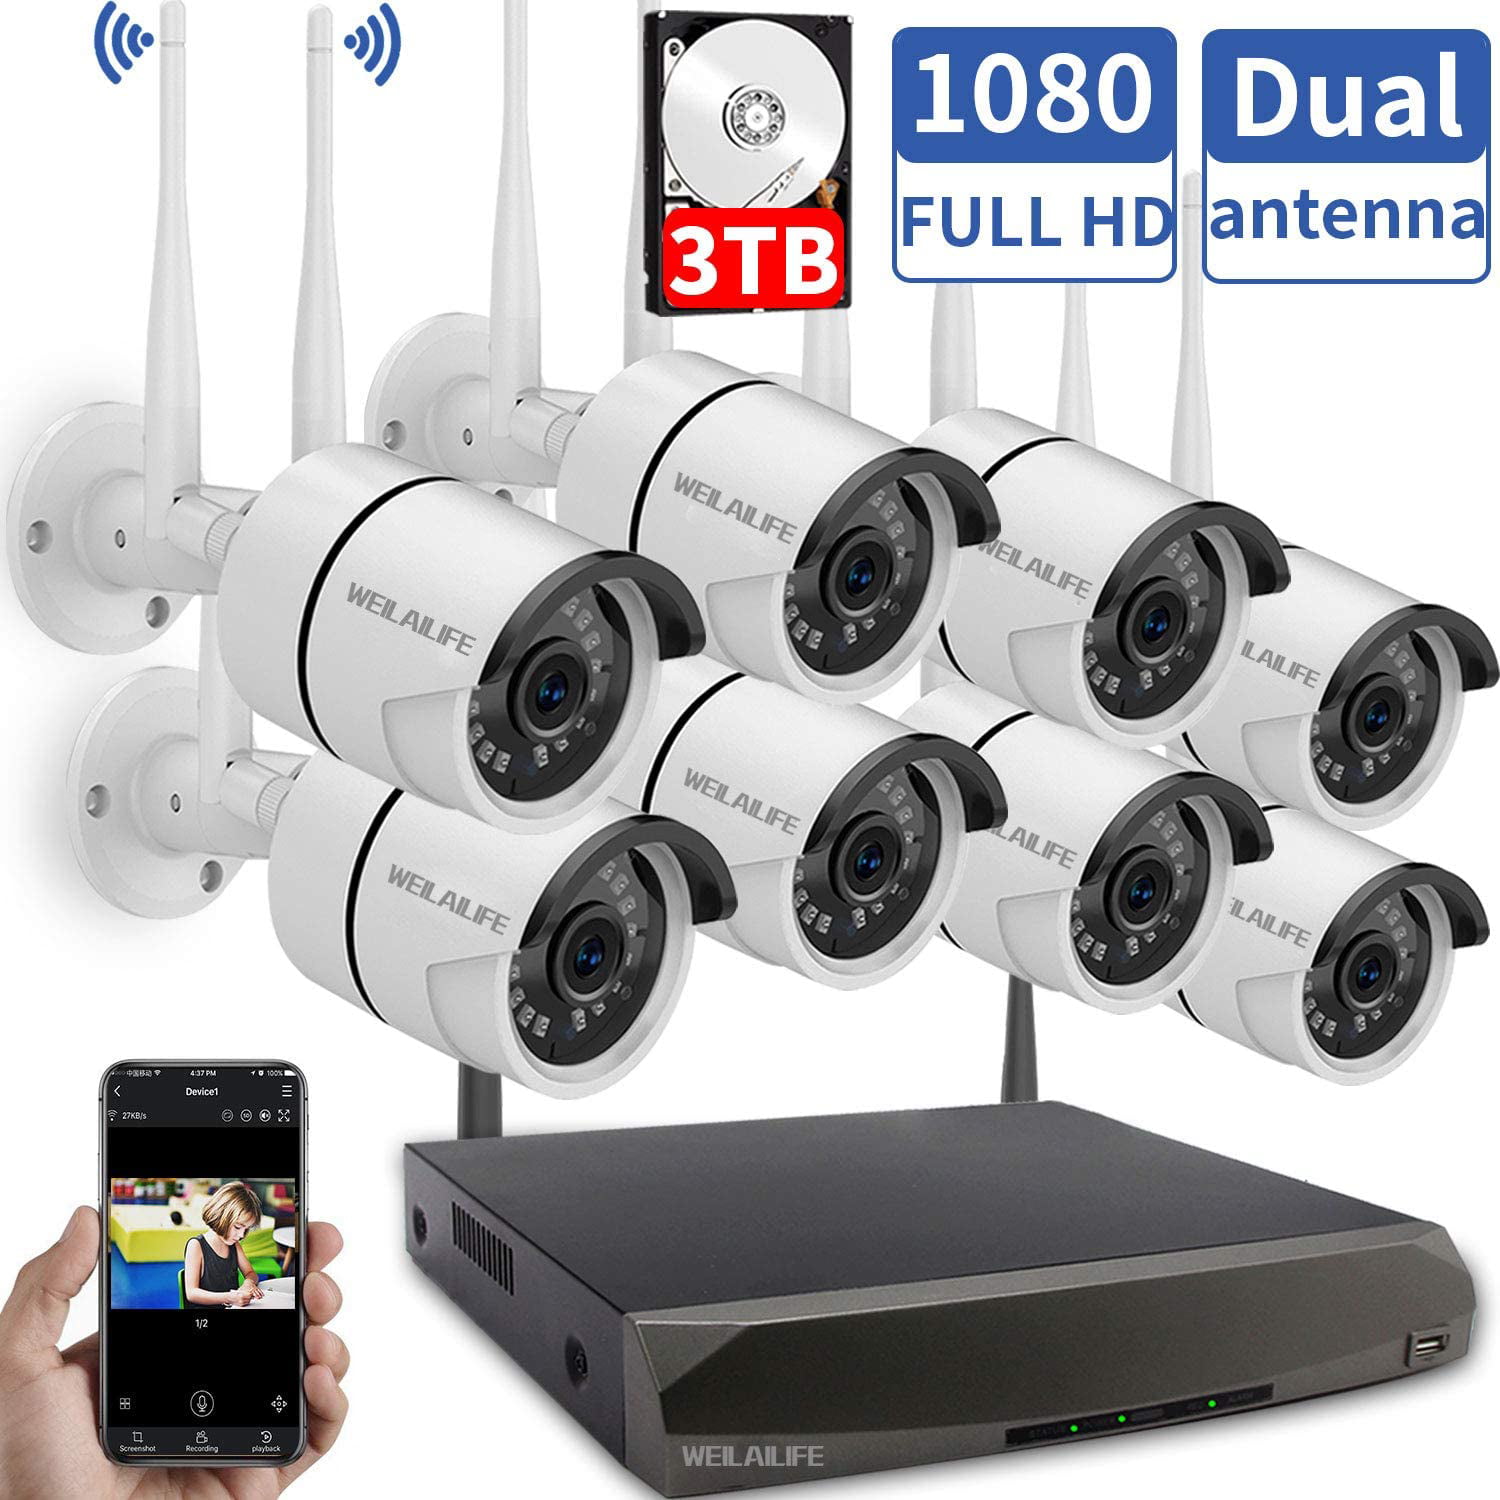 wireless security cameras